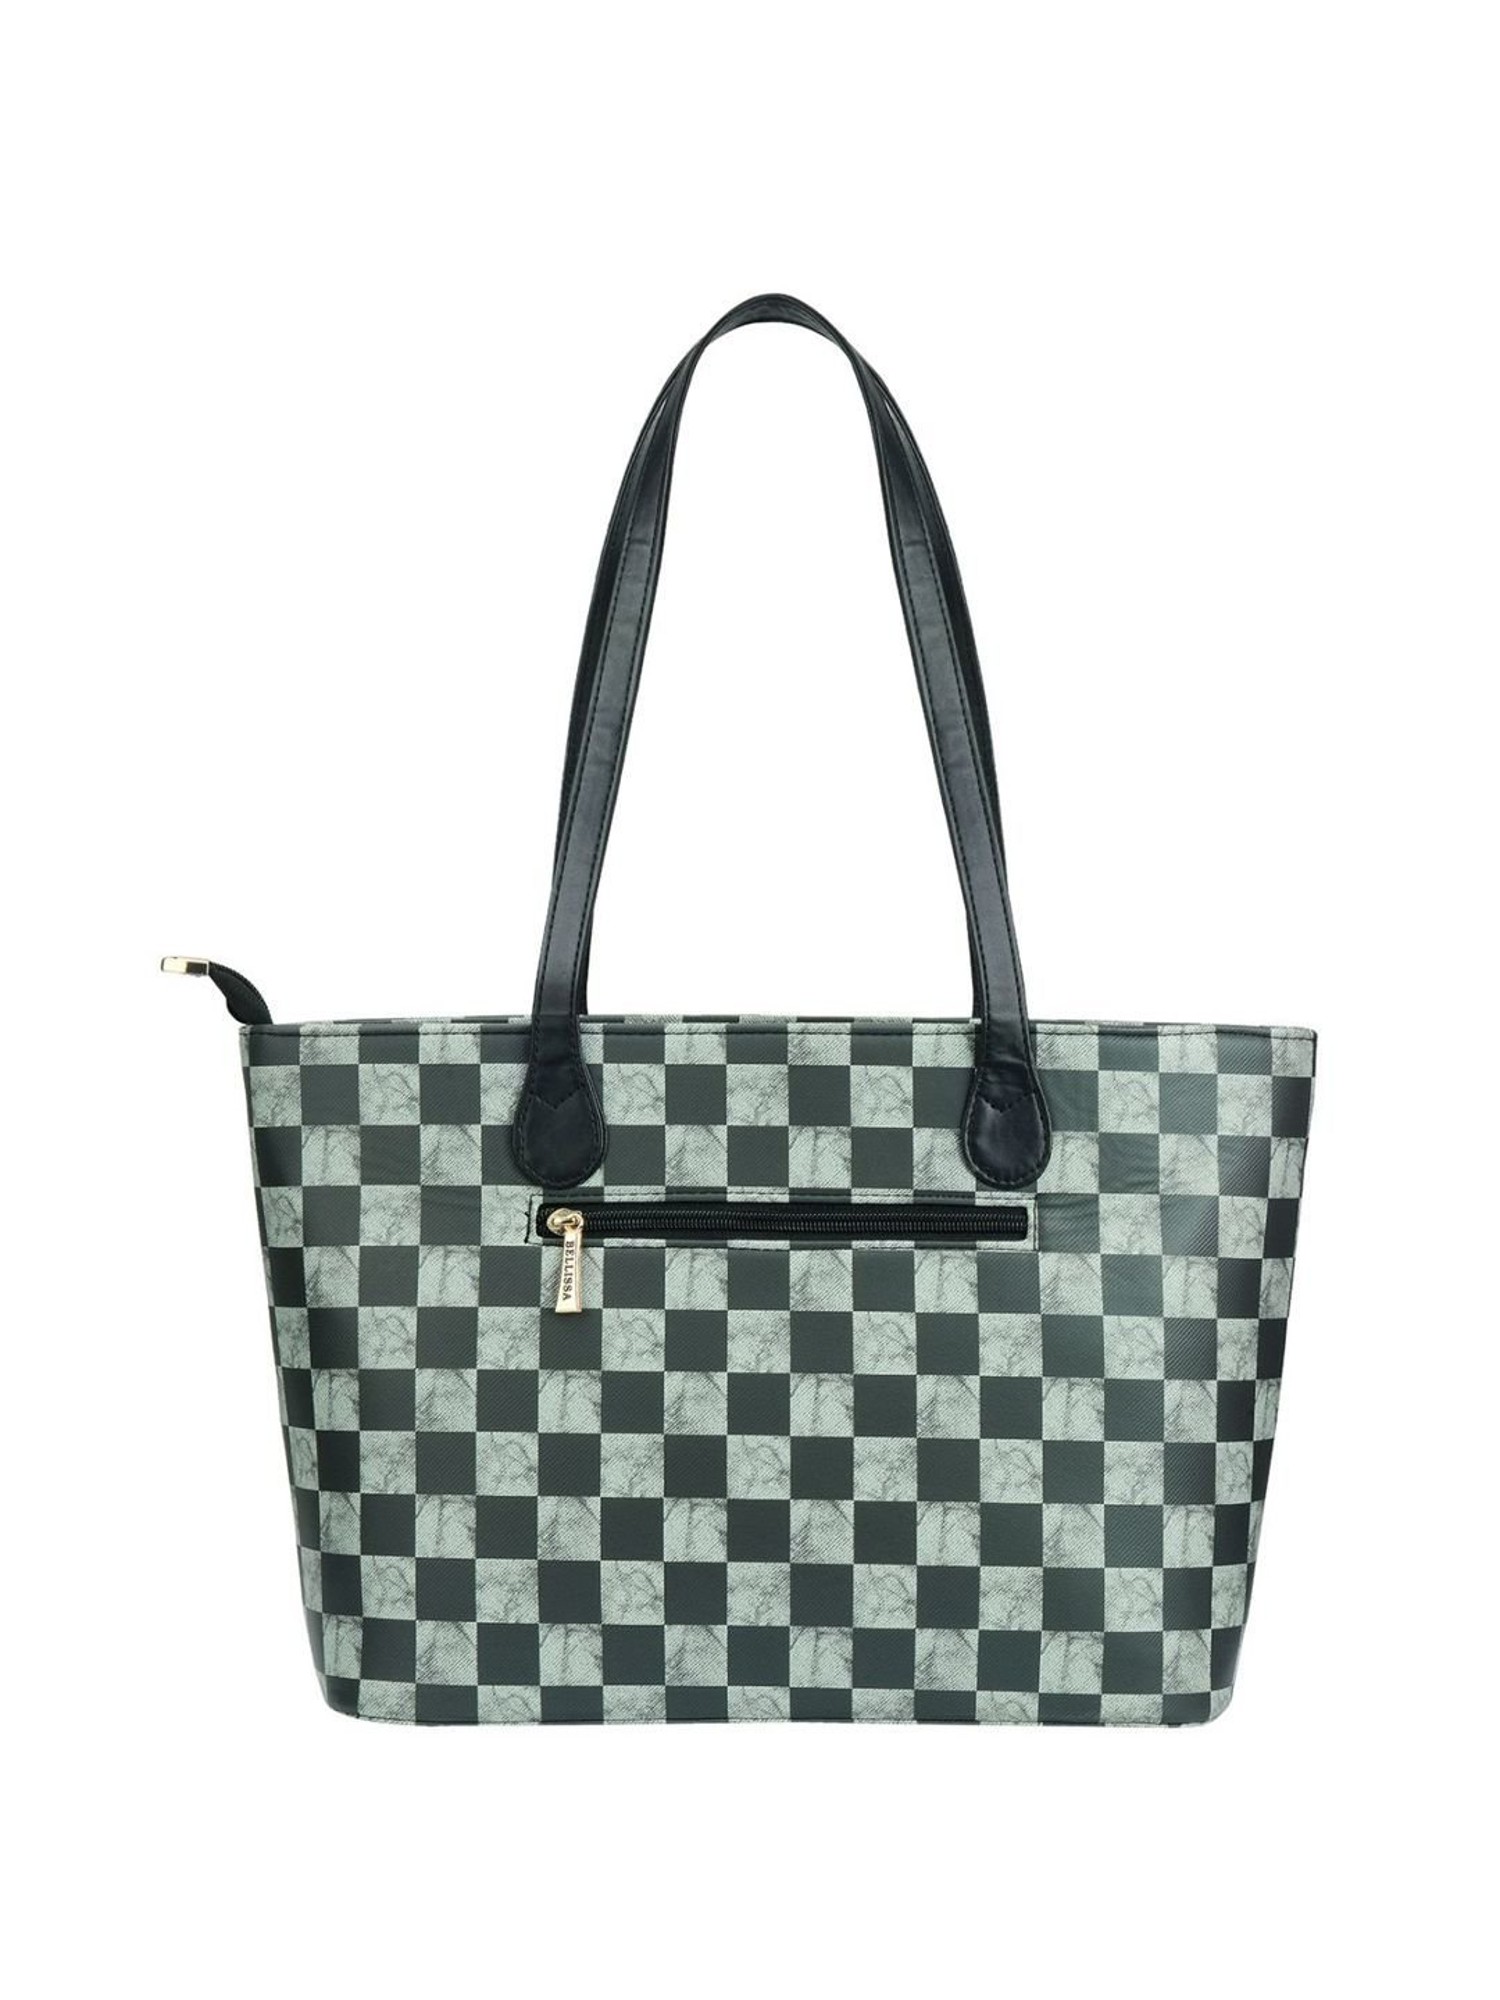 gray and white checkered louis vuitton purse